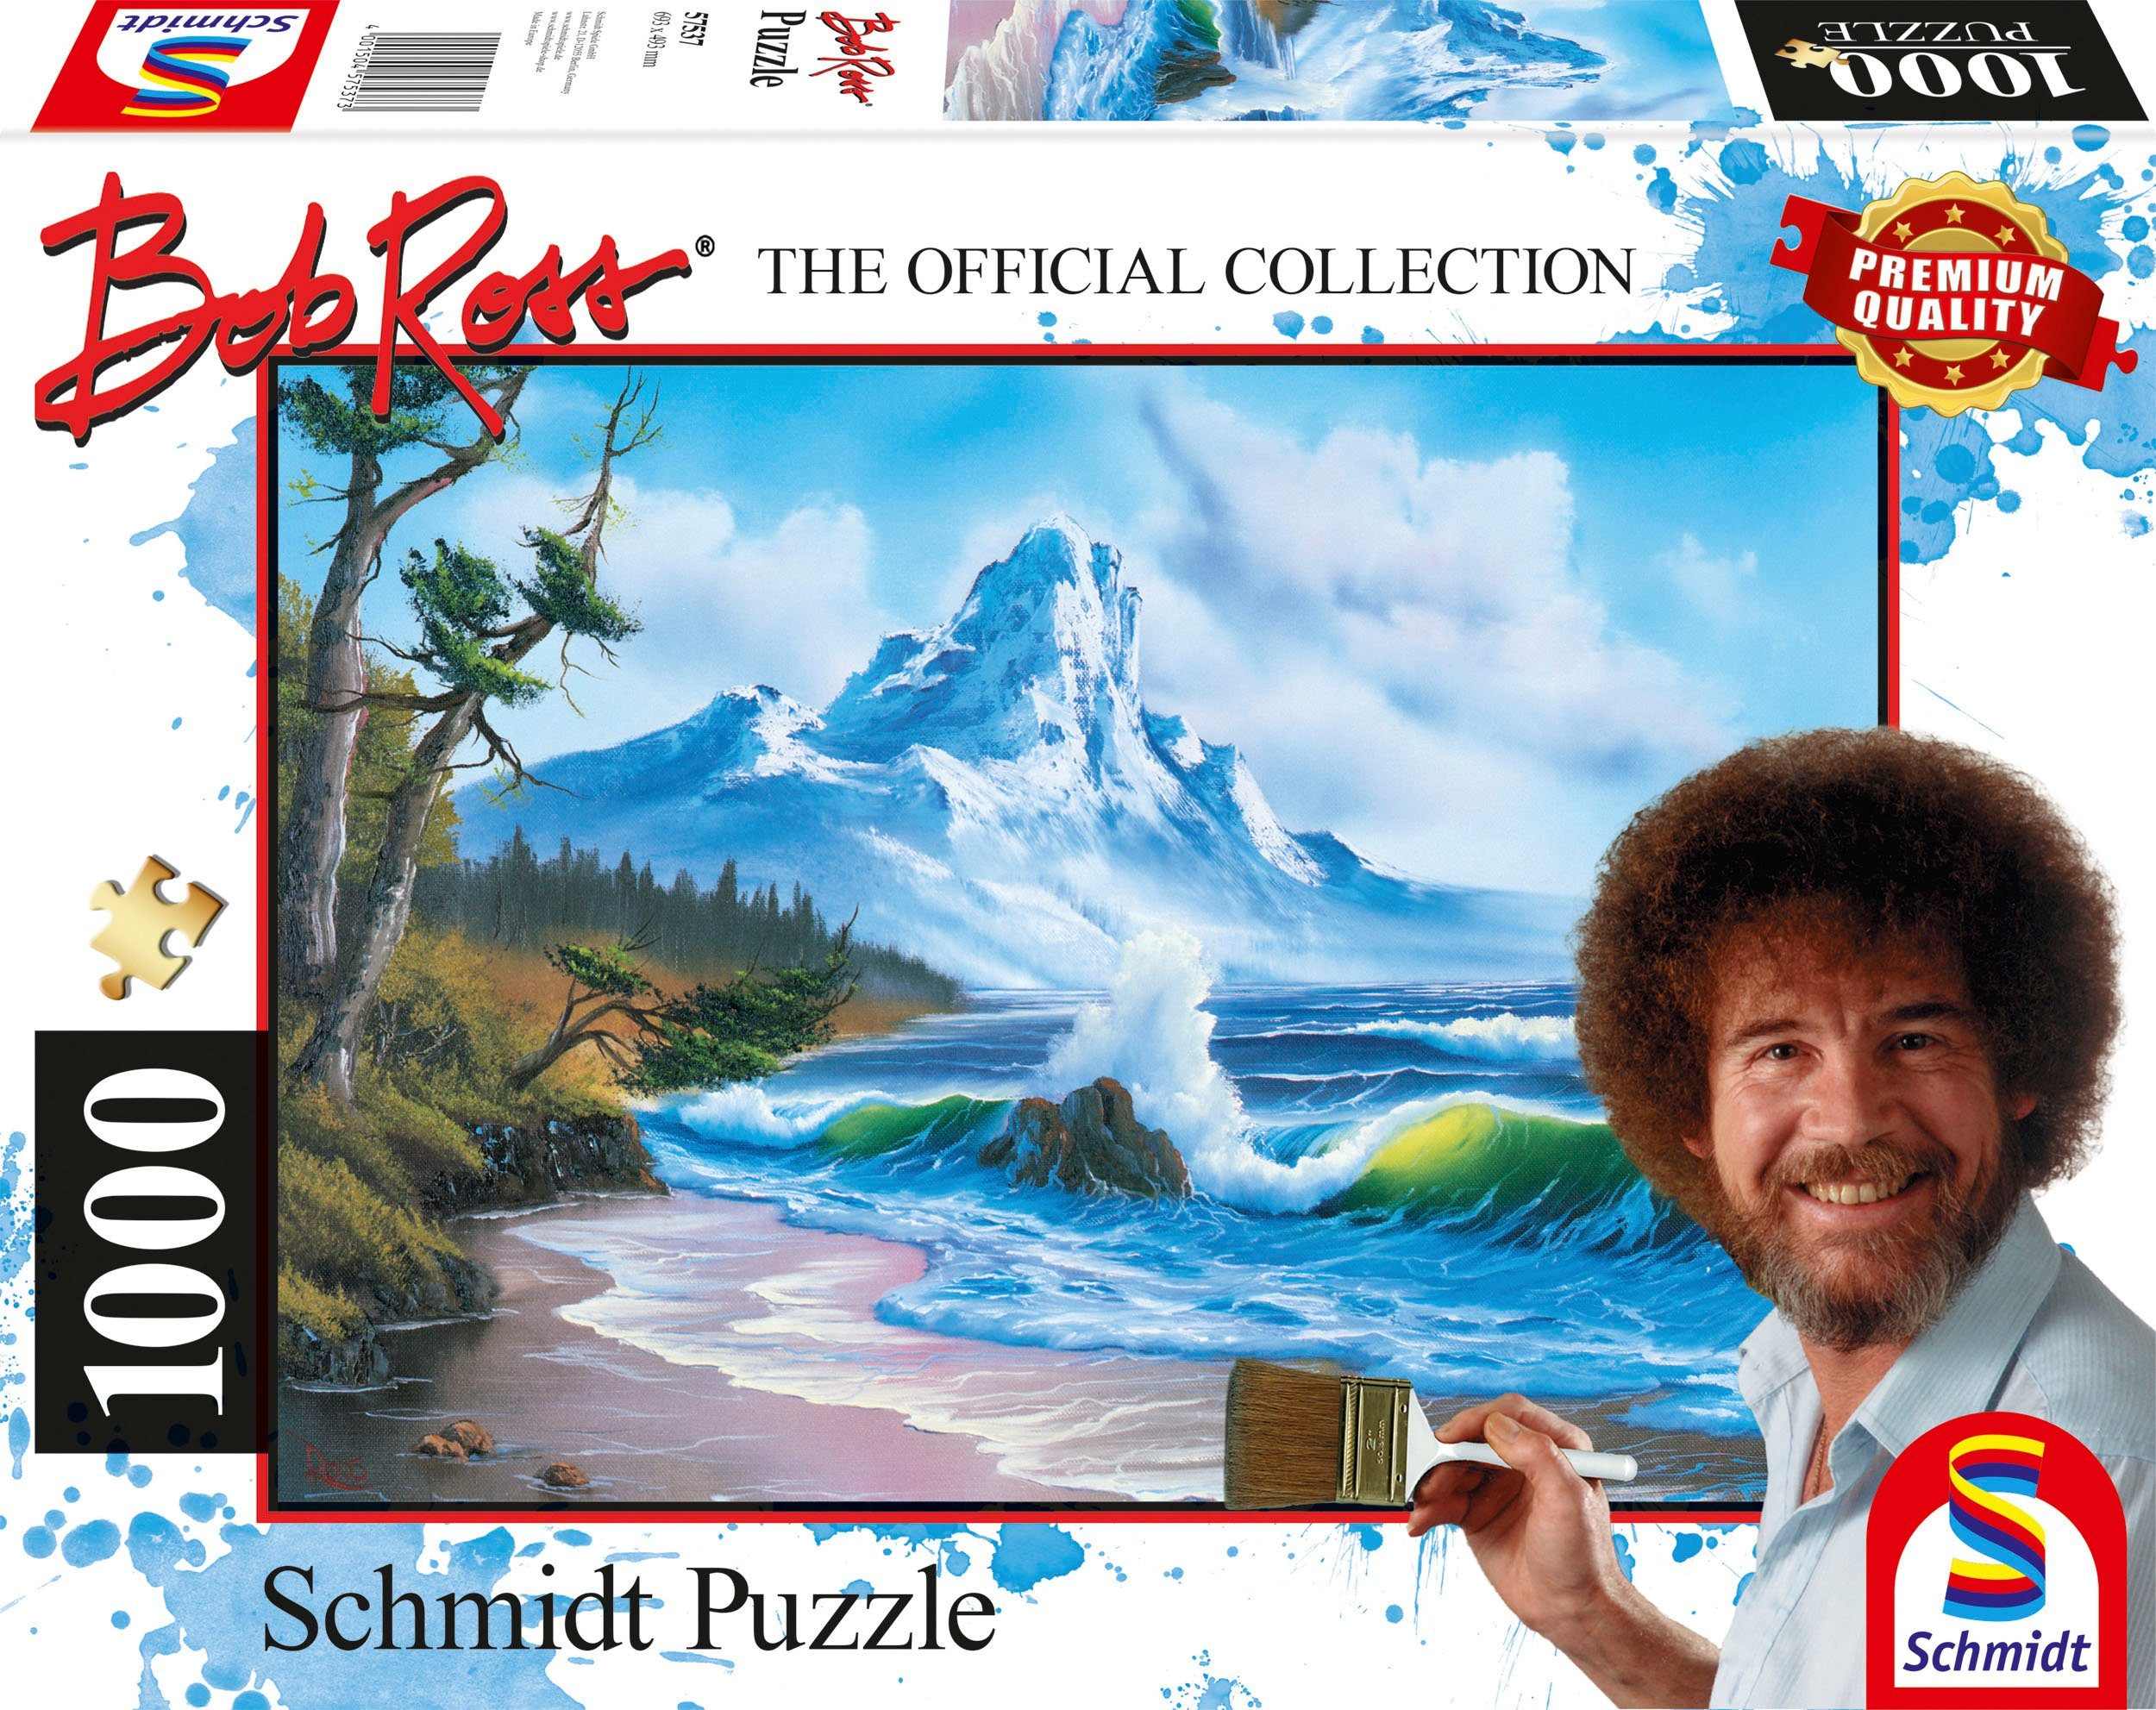 Made 1000 Berg Puzzle Schmidt in Europe Spiele Puzzleteile, Meer, am Ross, Bob